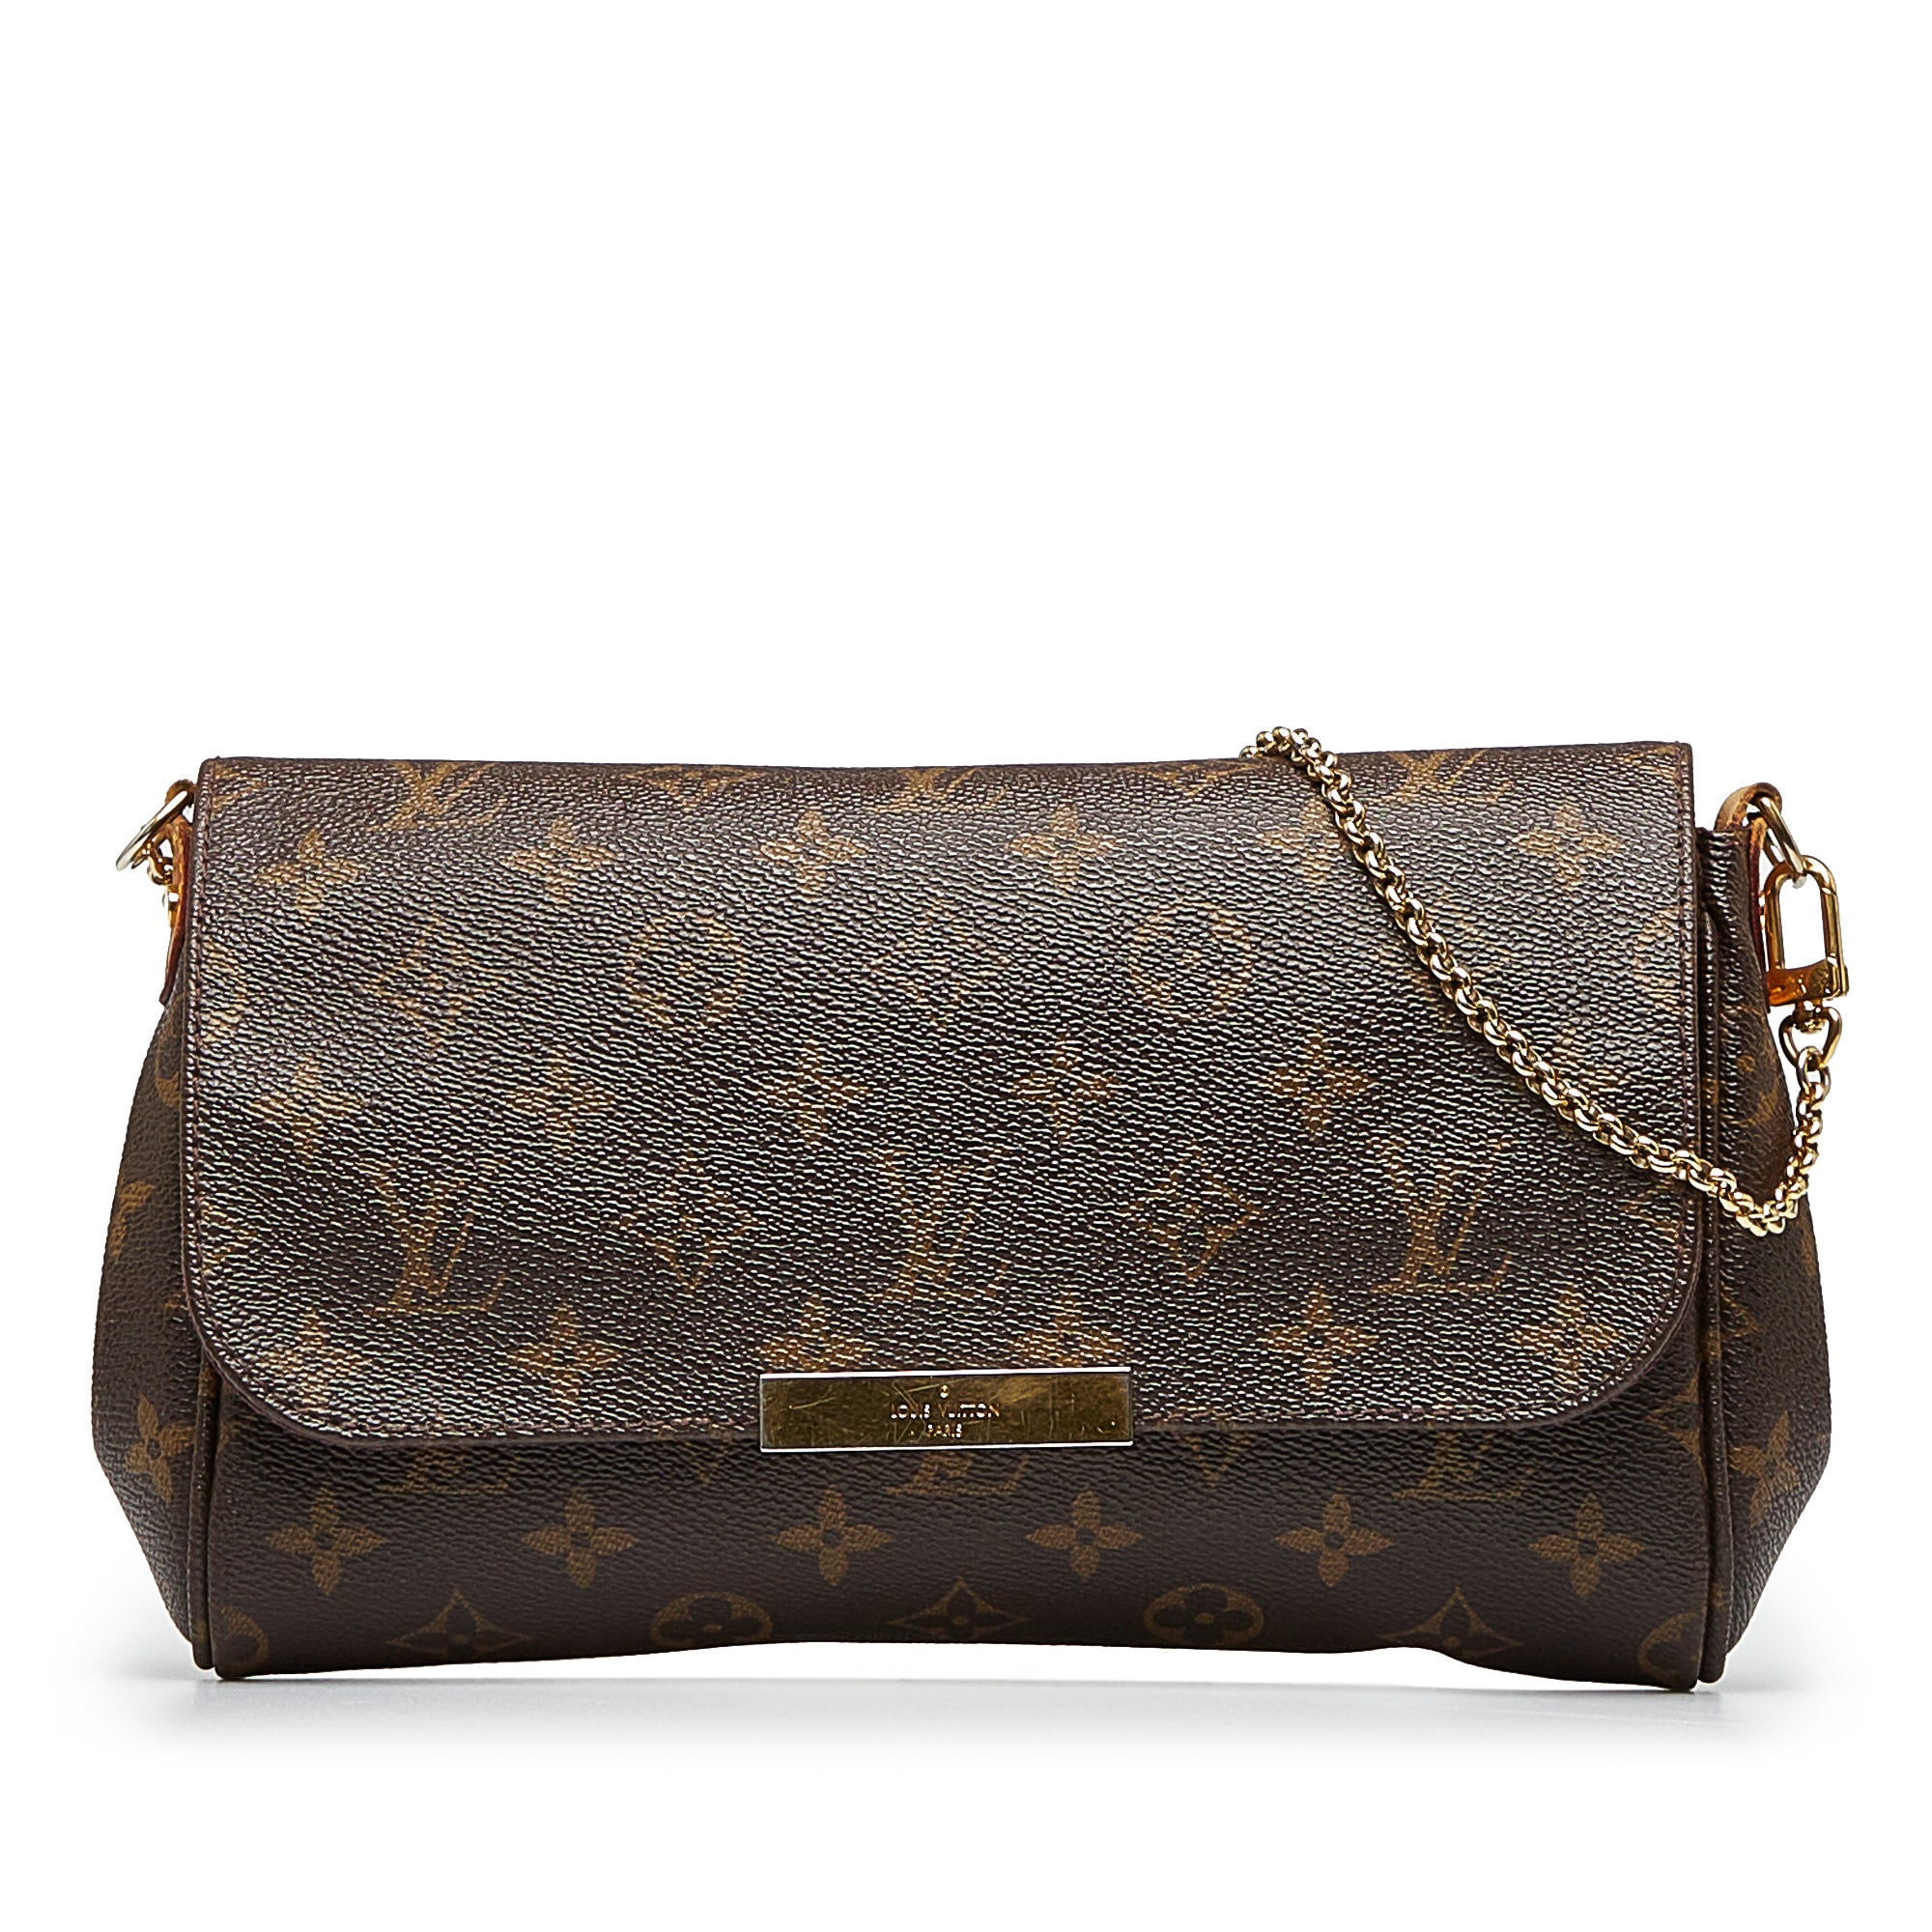 Discontinued PRELOVED Louis Vuitton Favorite MM Monogram Bag